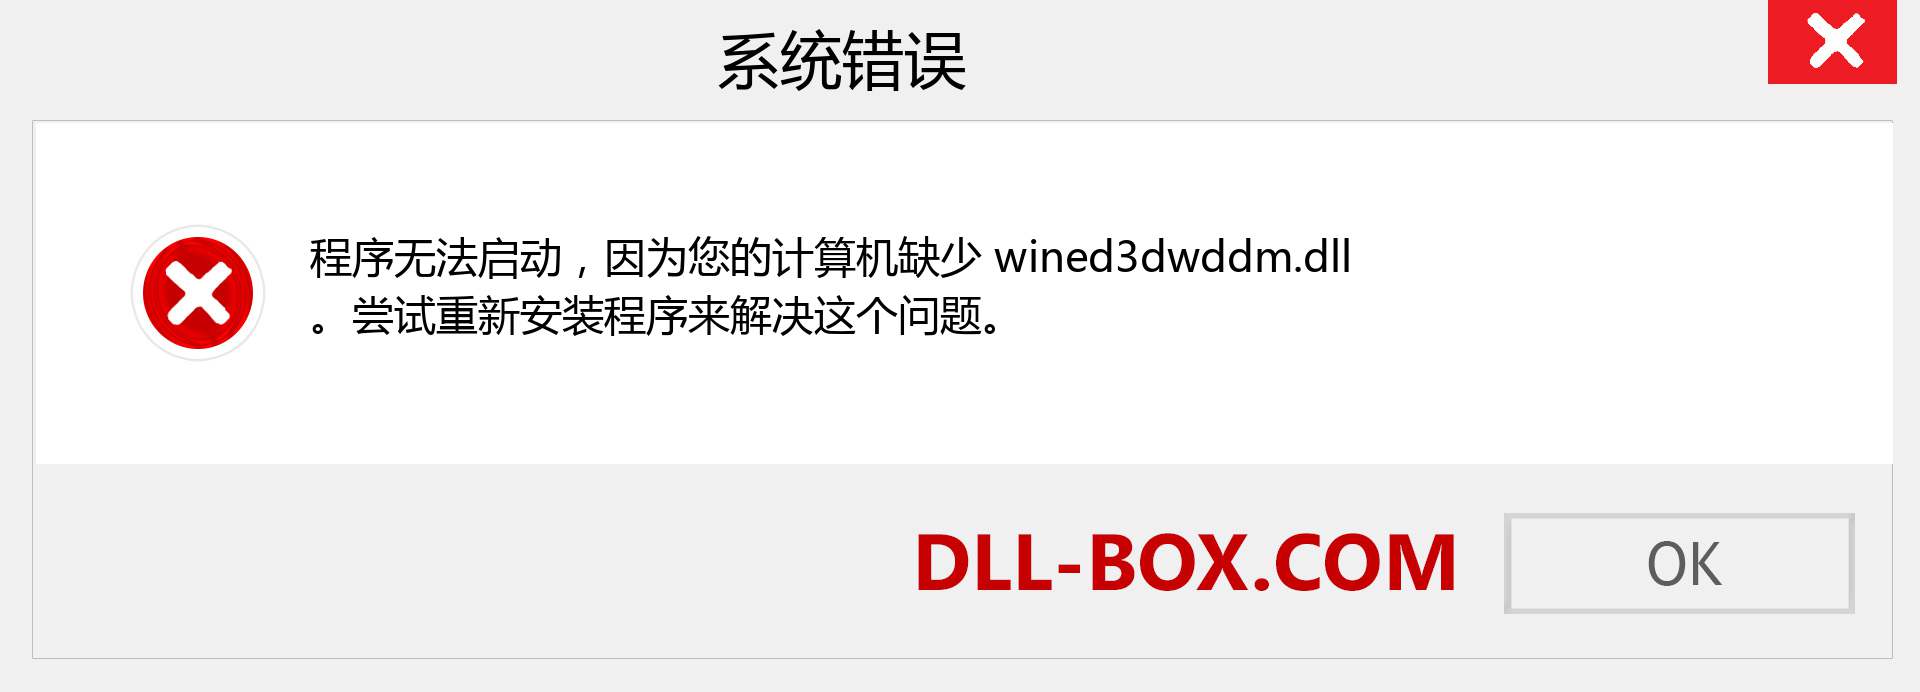 wined3dwddm.dll 文件丢失？。 适用于 Windows 7、8、10 的下载 - 修复 Windows、照片、图像上的 wined3dwddm dll 丢失错误